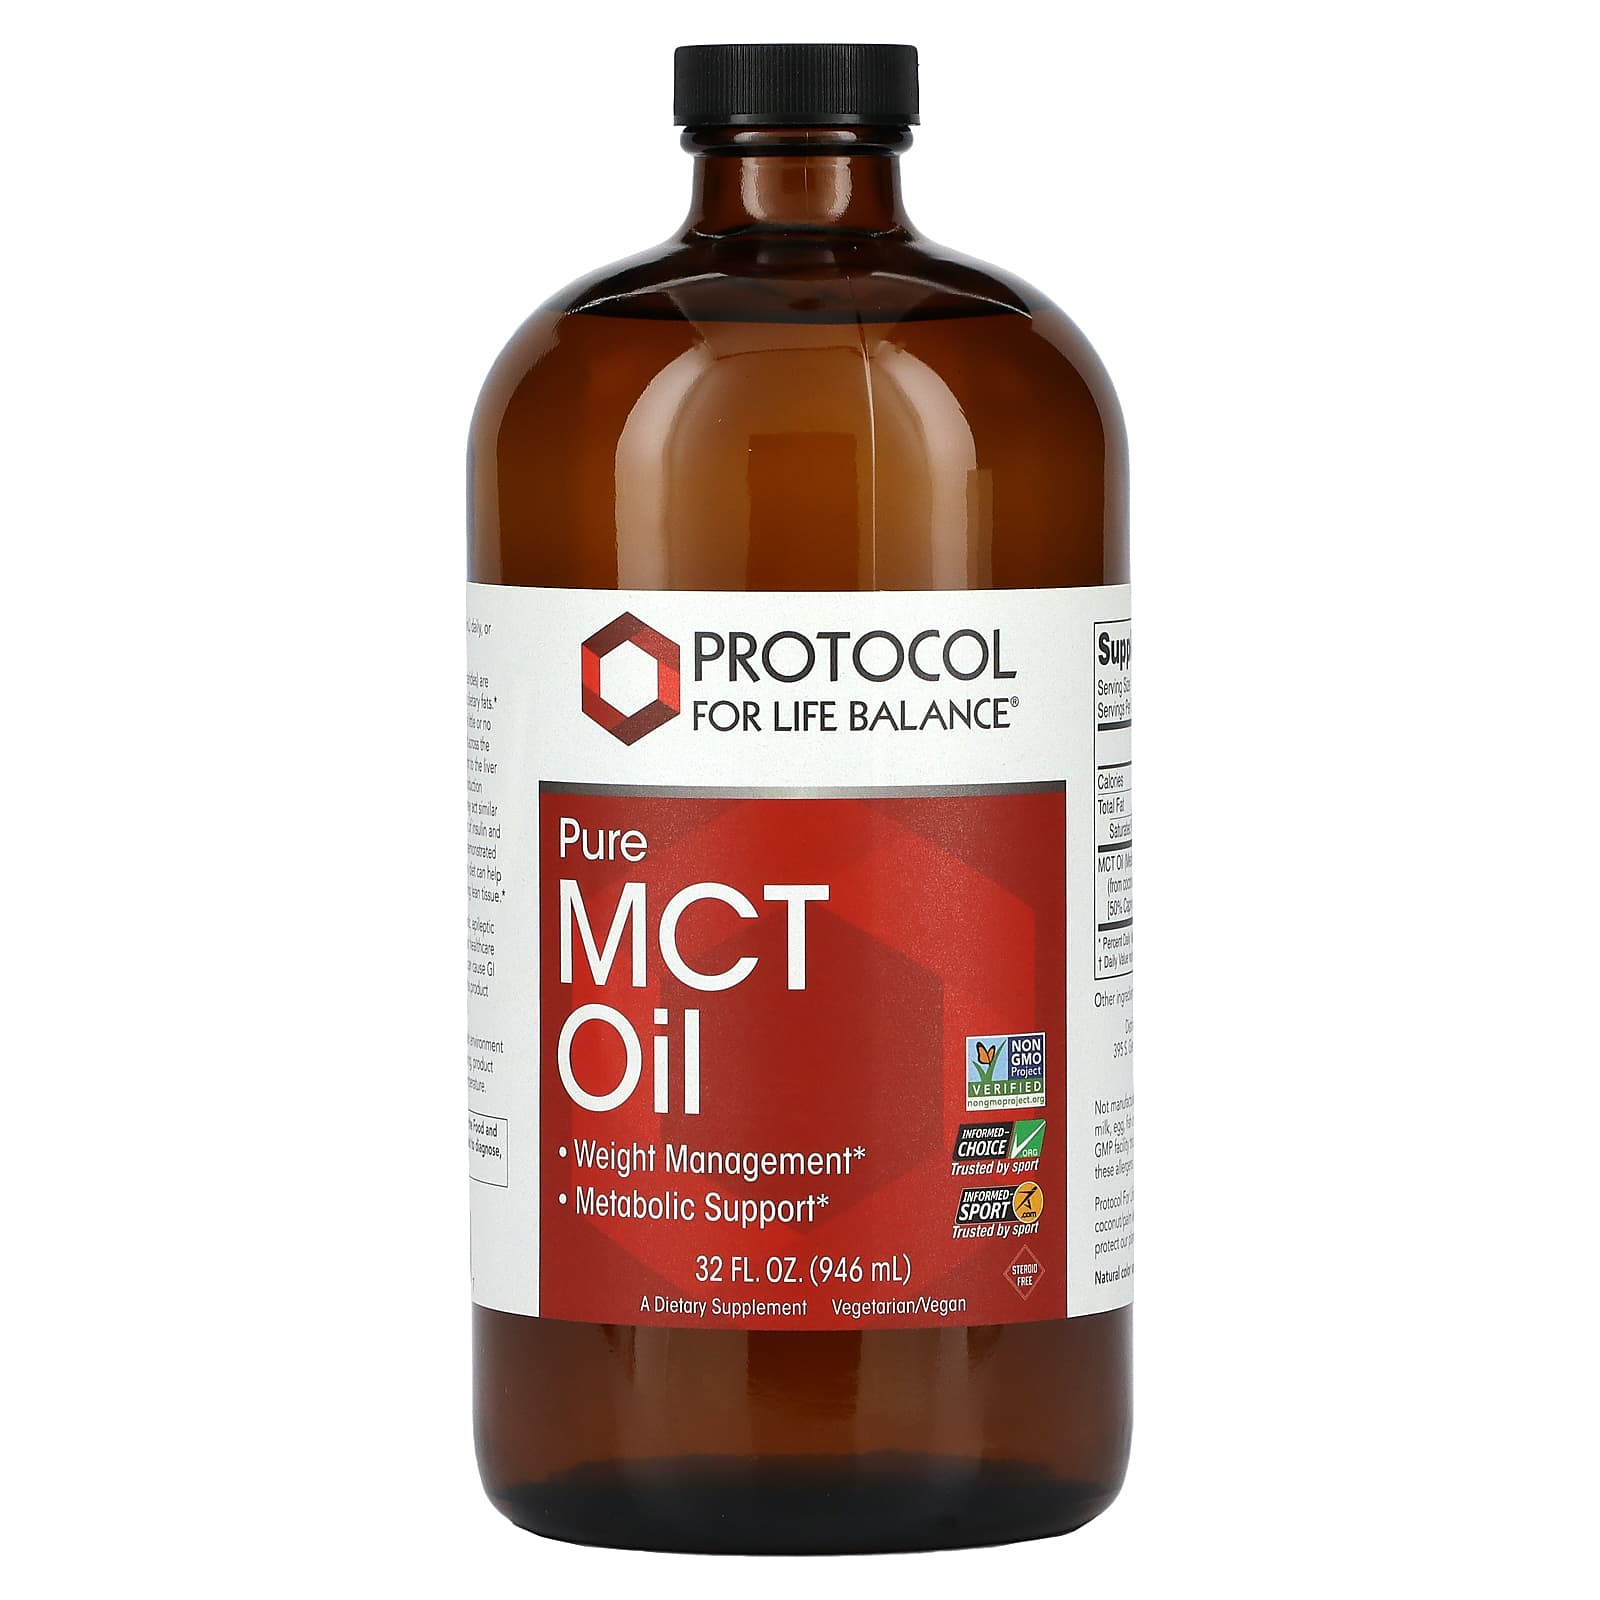 Protocol for Life Balance 퓨어 MCT 오일 32 fl oz (946 ml)